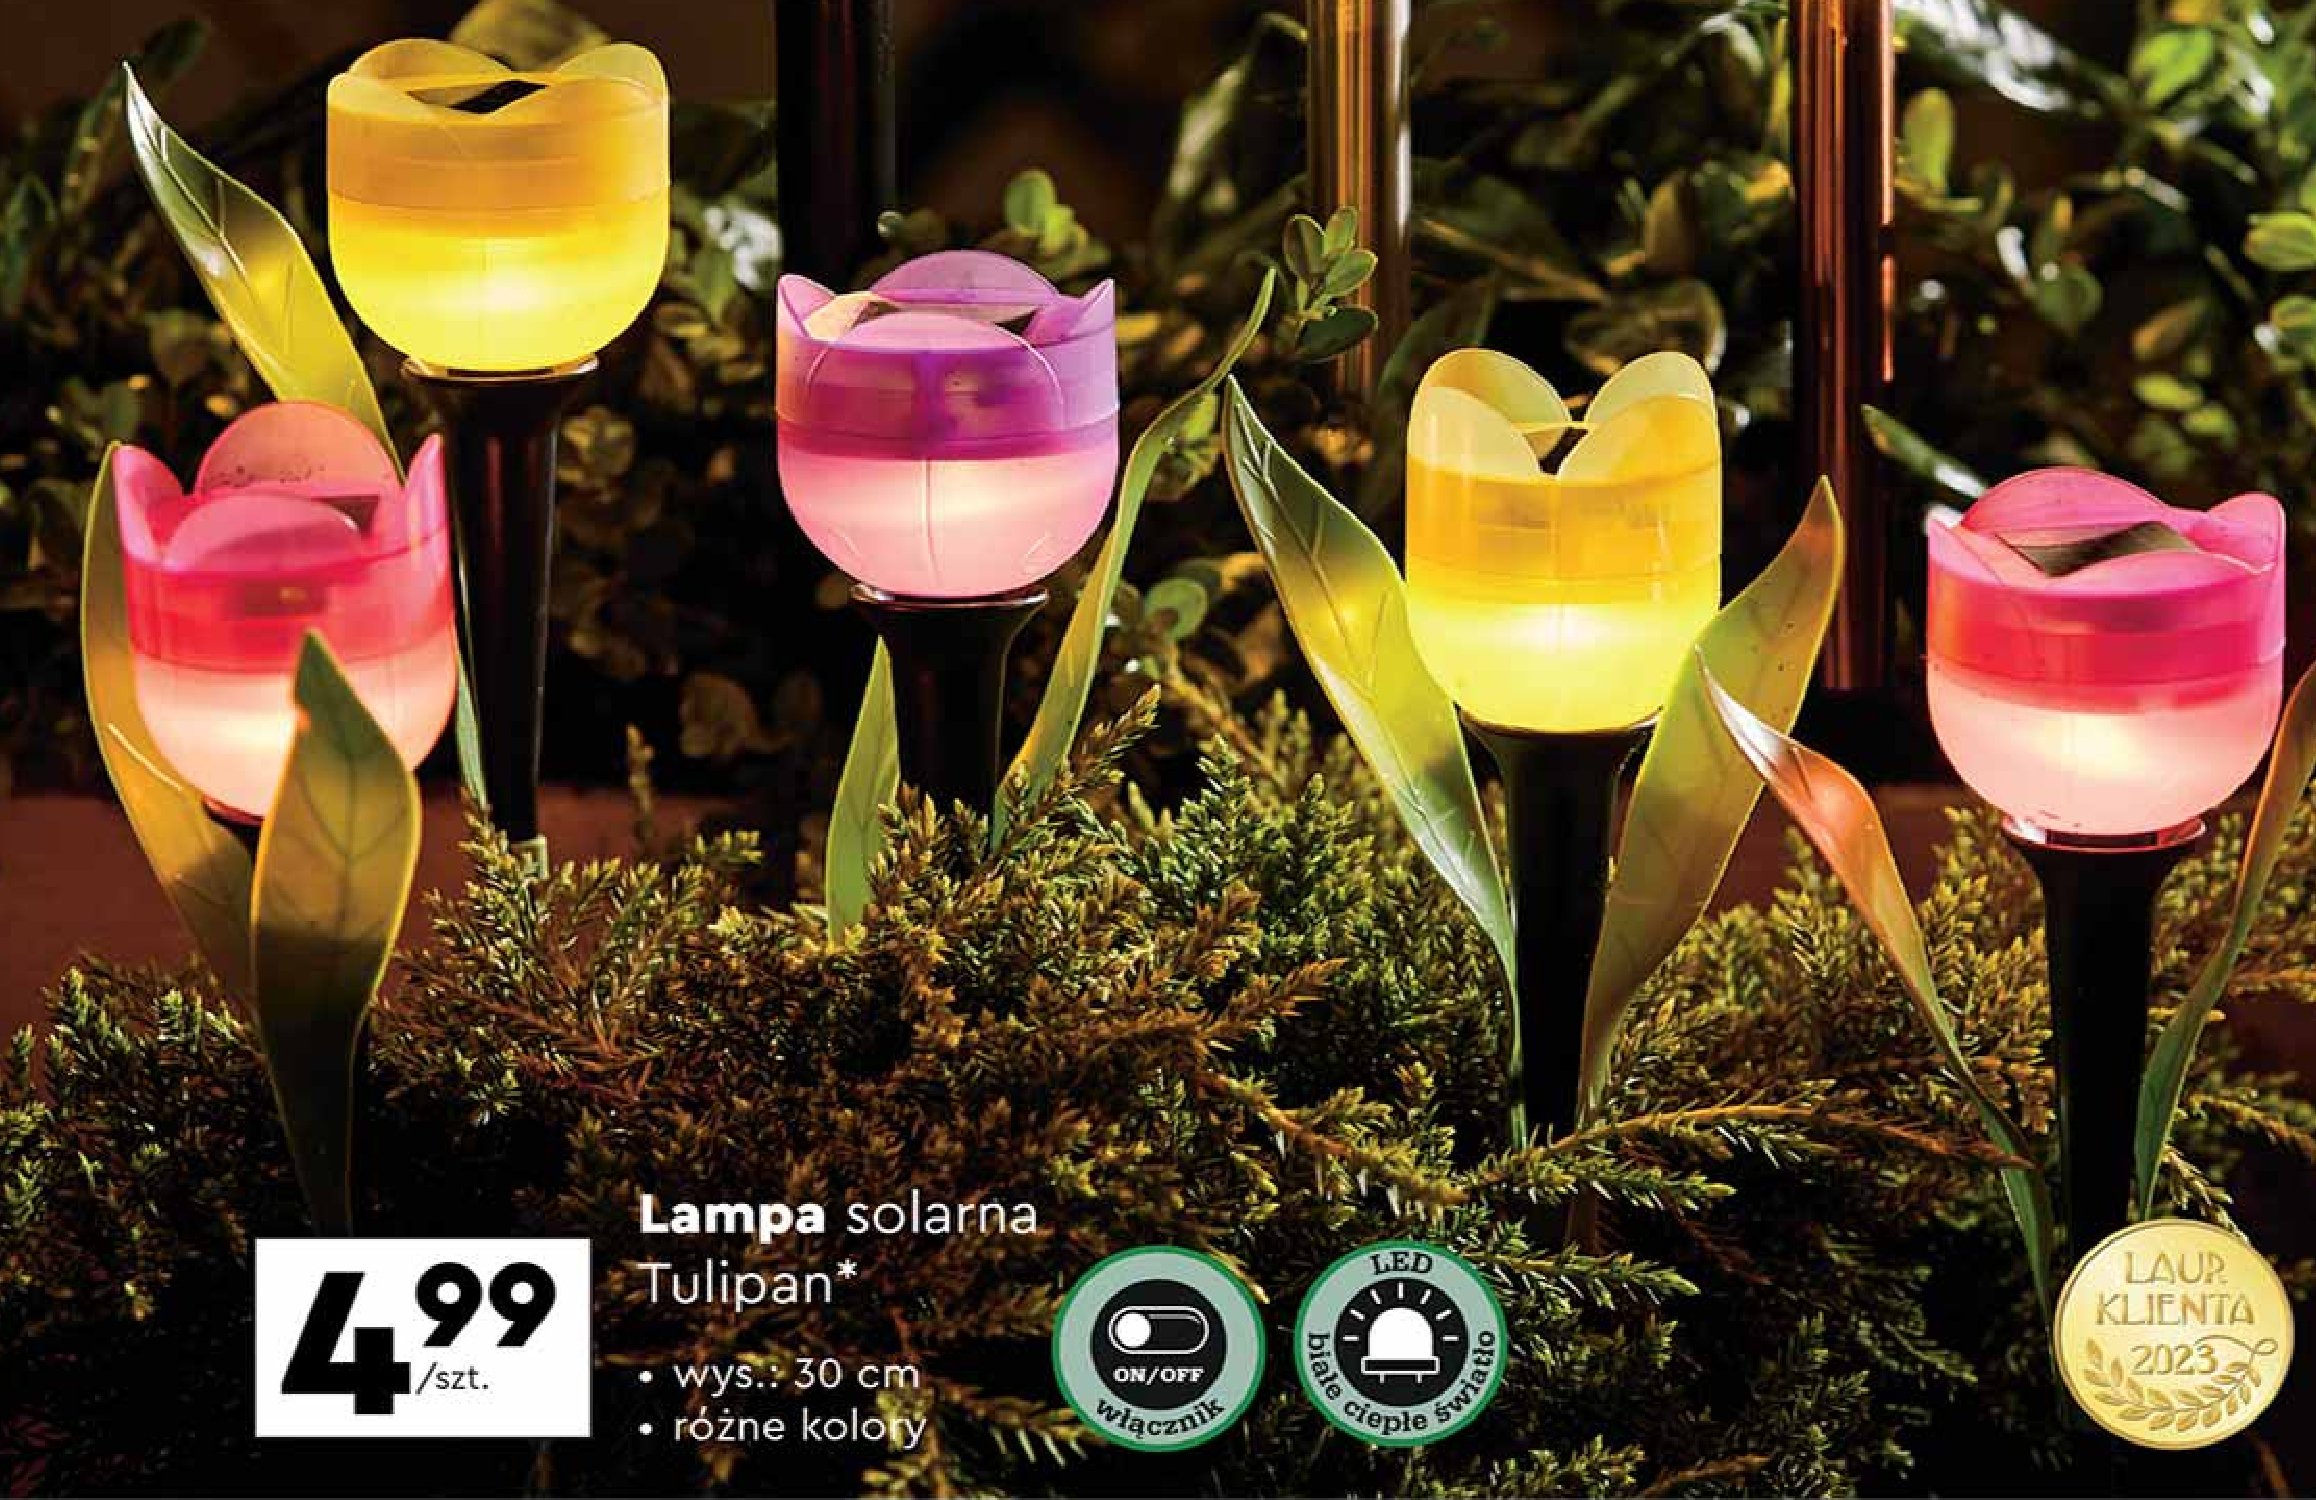 Lampa solarna tulipan wys. 30 cm Gardenic promocja